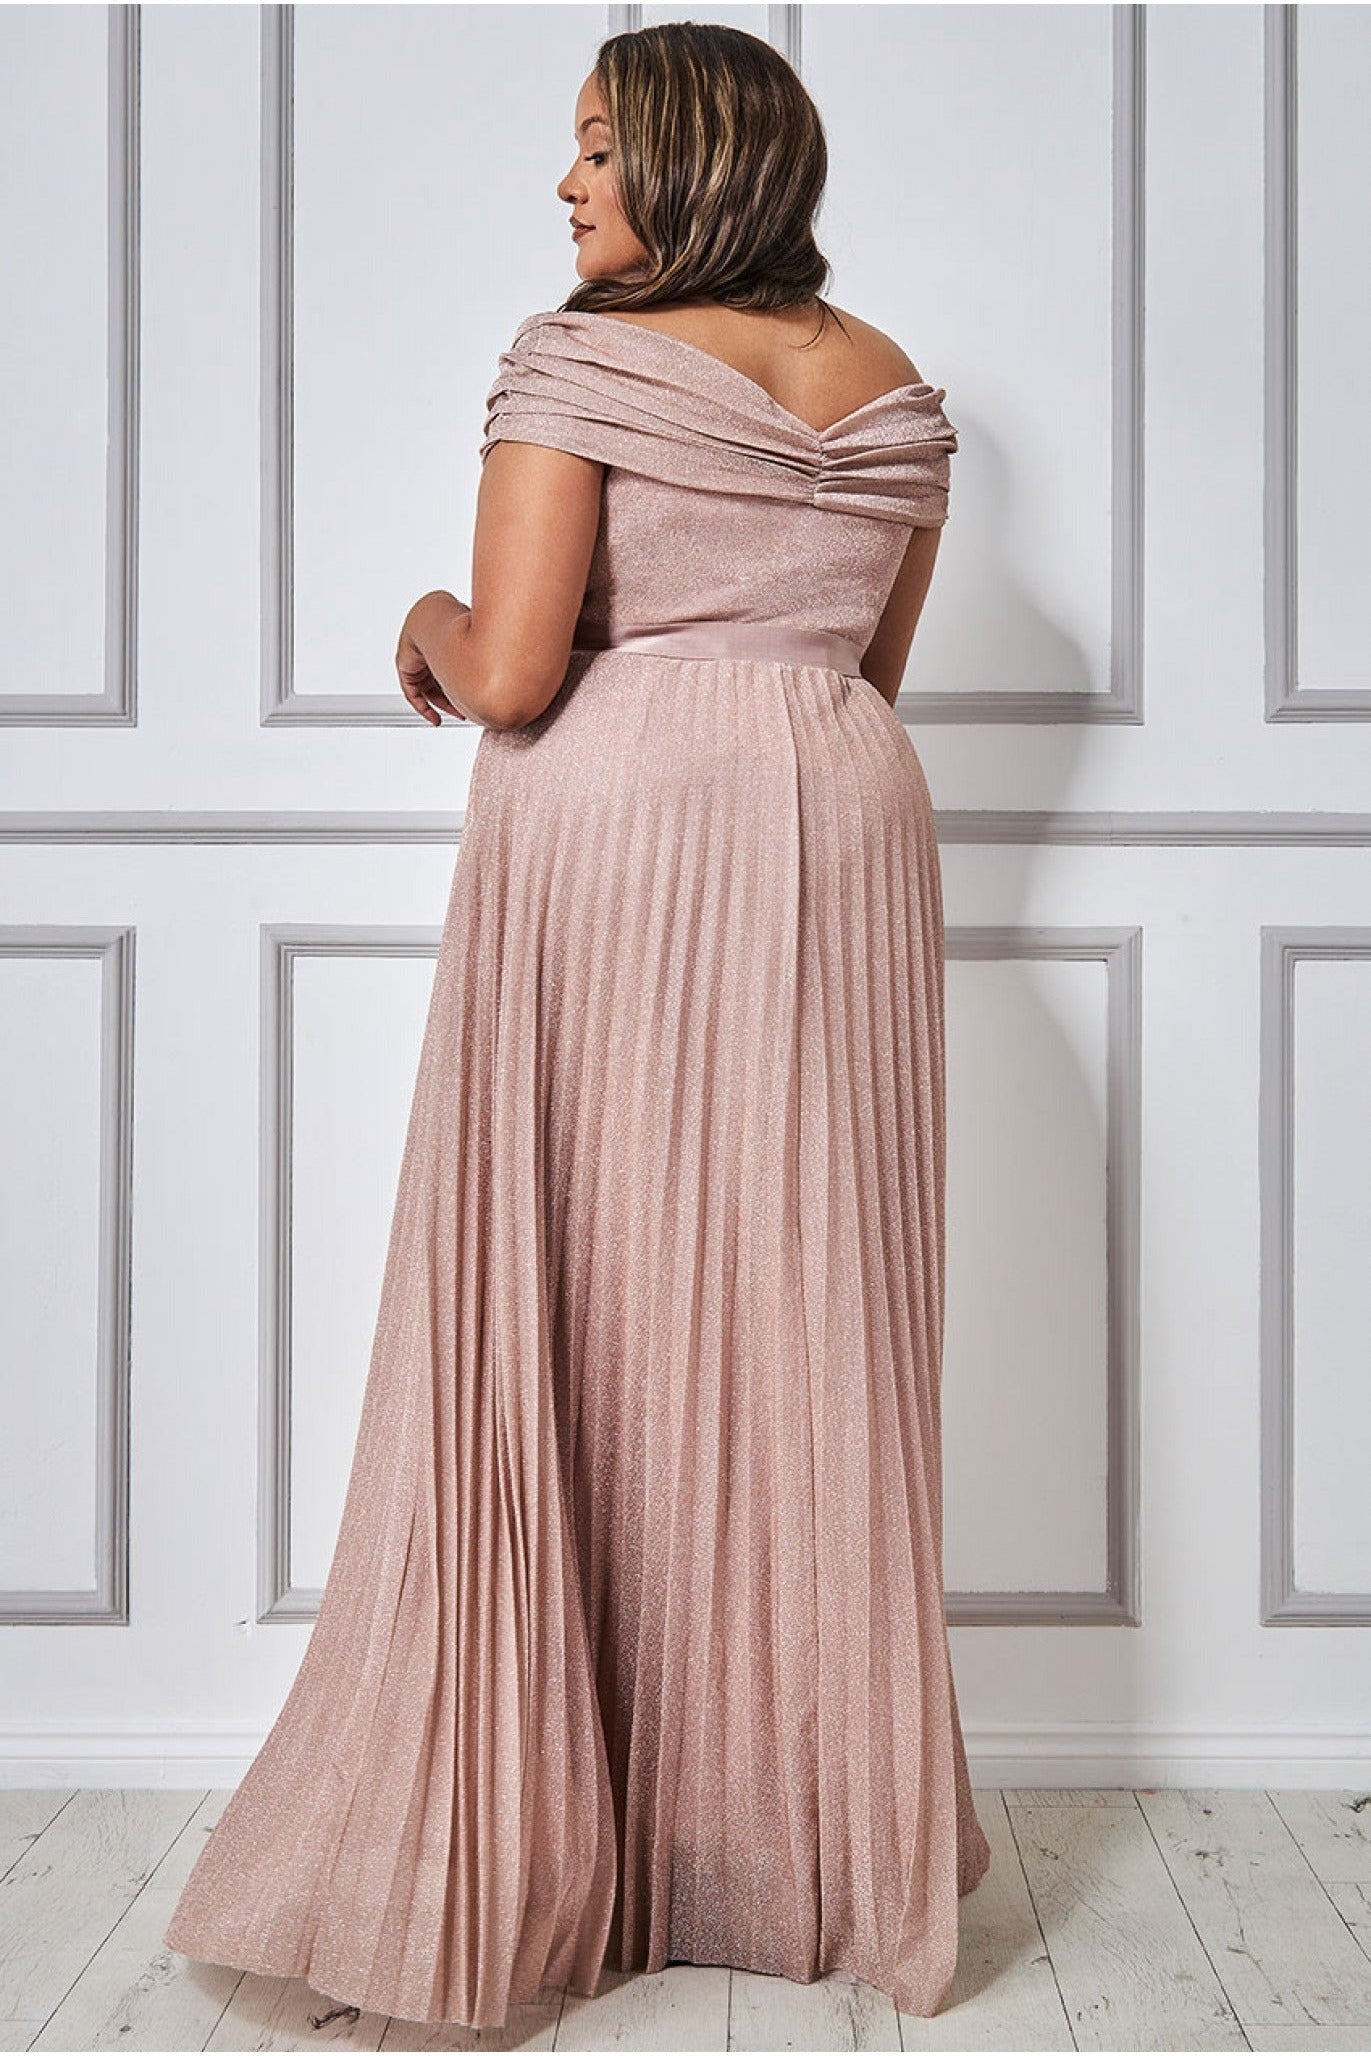 Bardot Pleated Skirt Maxi Dress - Blush DR3096P